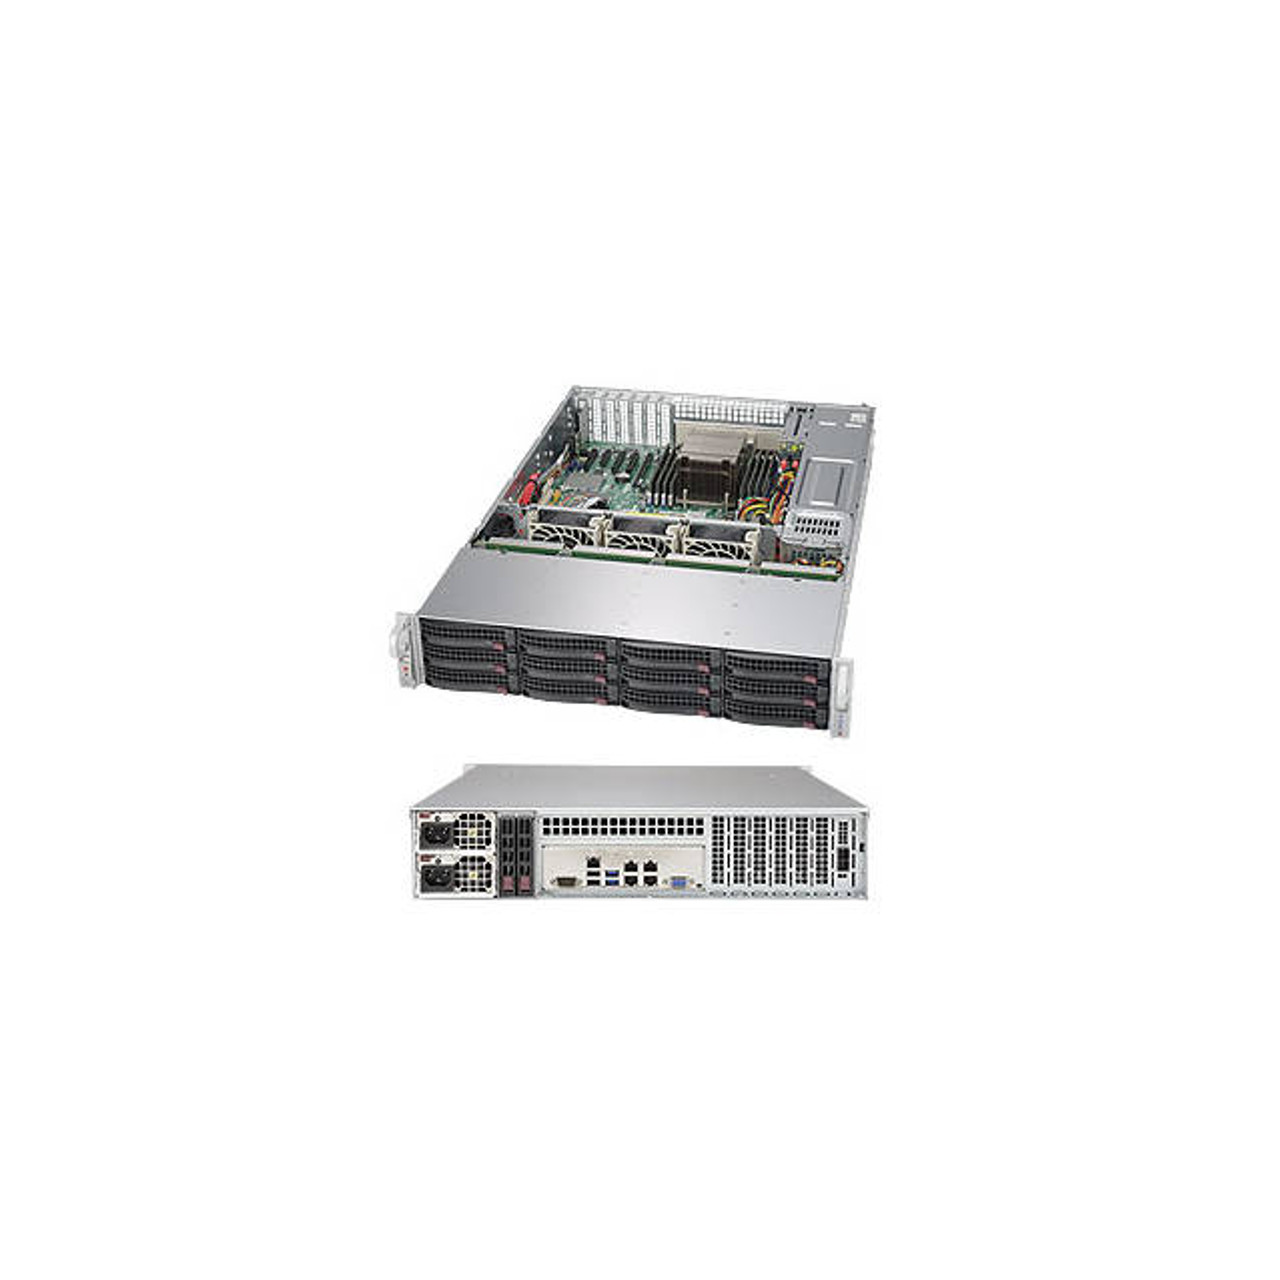 Supermicro SuperStorage Server SSG-5028R-E1CR12L LGA2011 920W 2U Rackmount Server Barebone System (Black)